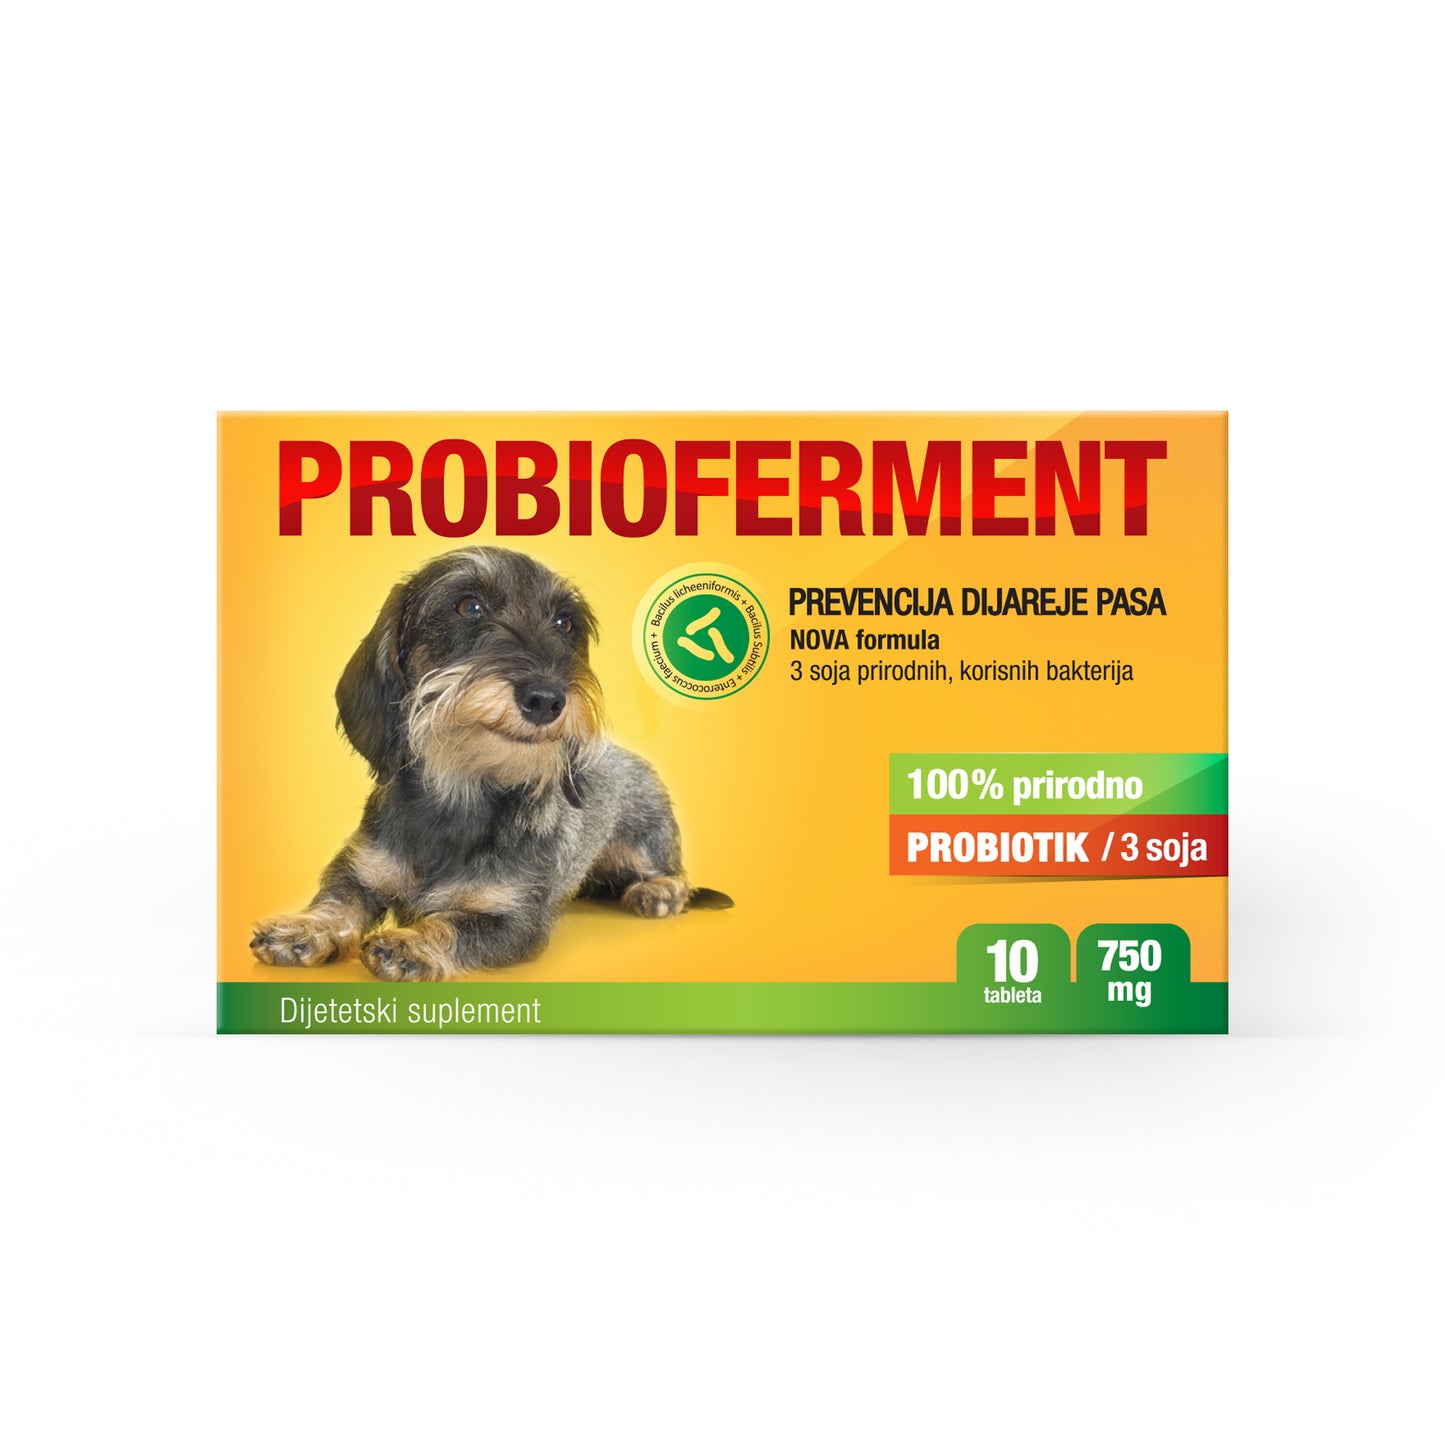 Probioferment - Probiotik za pse - Interagrar